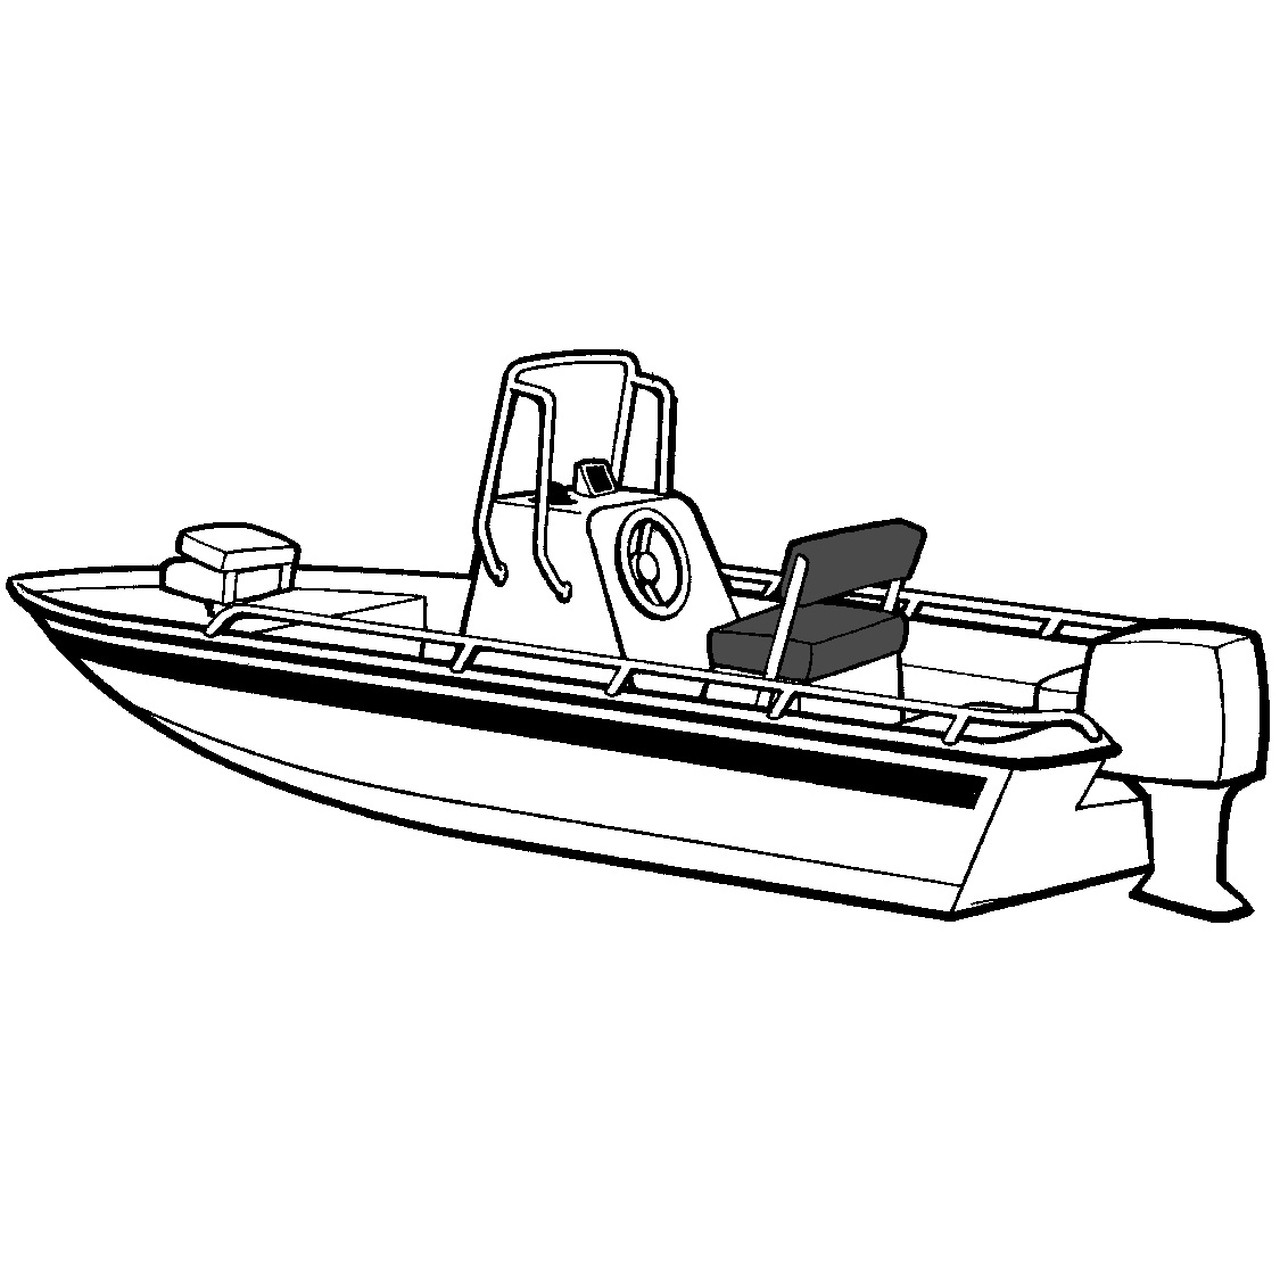 V-hull Shallow Draft Fishing Boat Cover, 19'9-20'8 x 85 Narrow